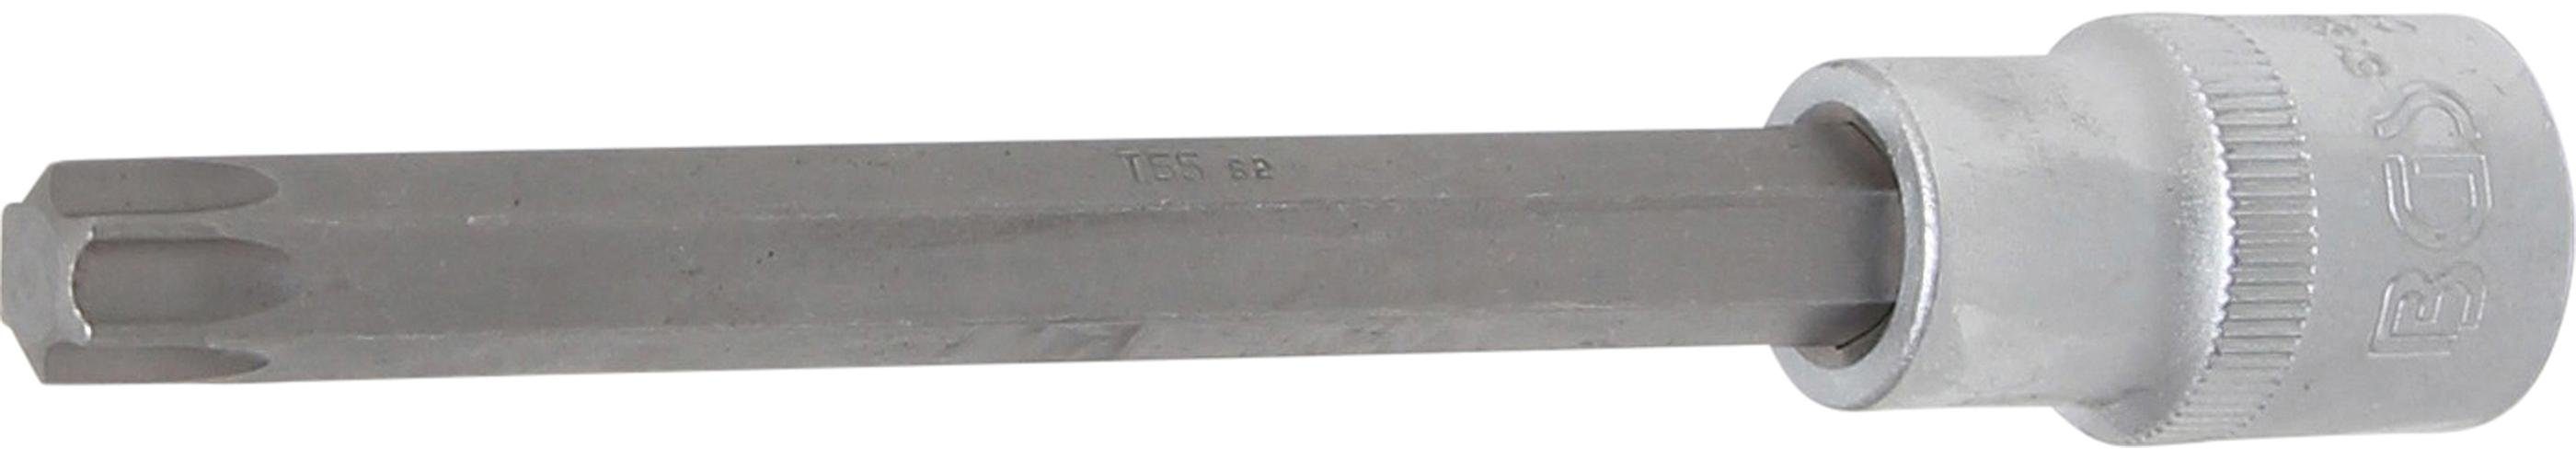 BGS technic Bit-Schraubendreher Bit-Einsatz, Länge 140 mm, Antrieb Innenvierkant 12,5 mm (1/2), T-Profil (für Torx) T55